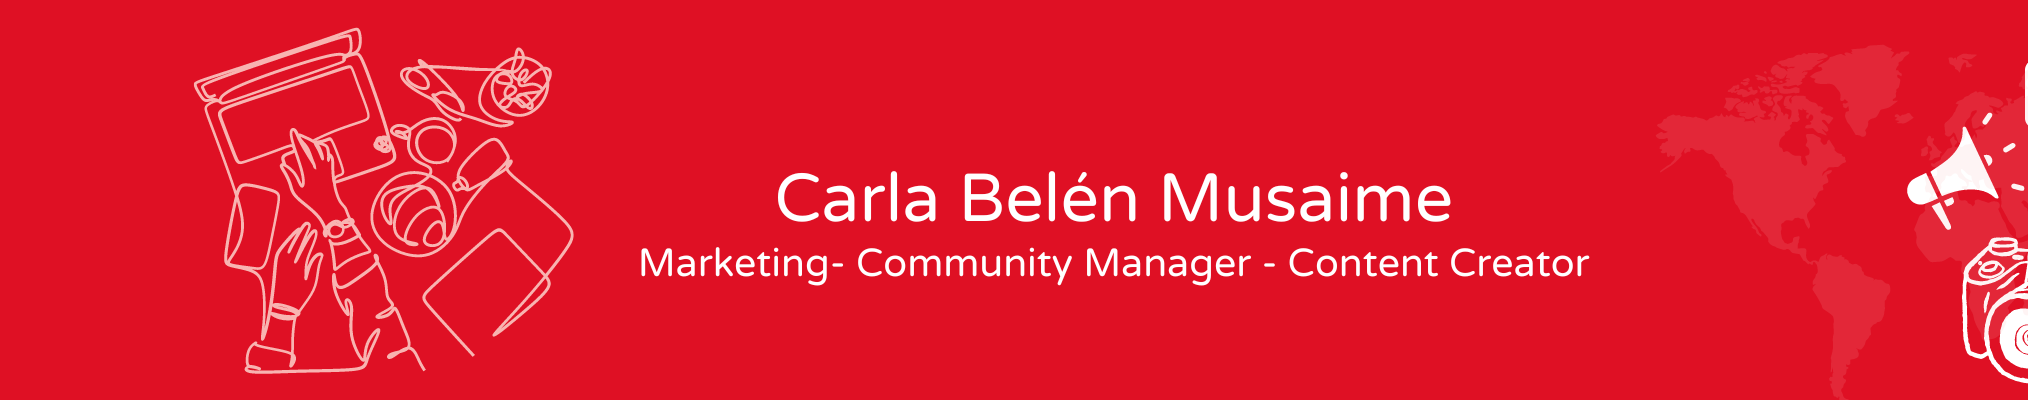 Carla Belén Musaime's profile banner